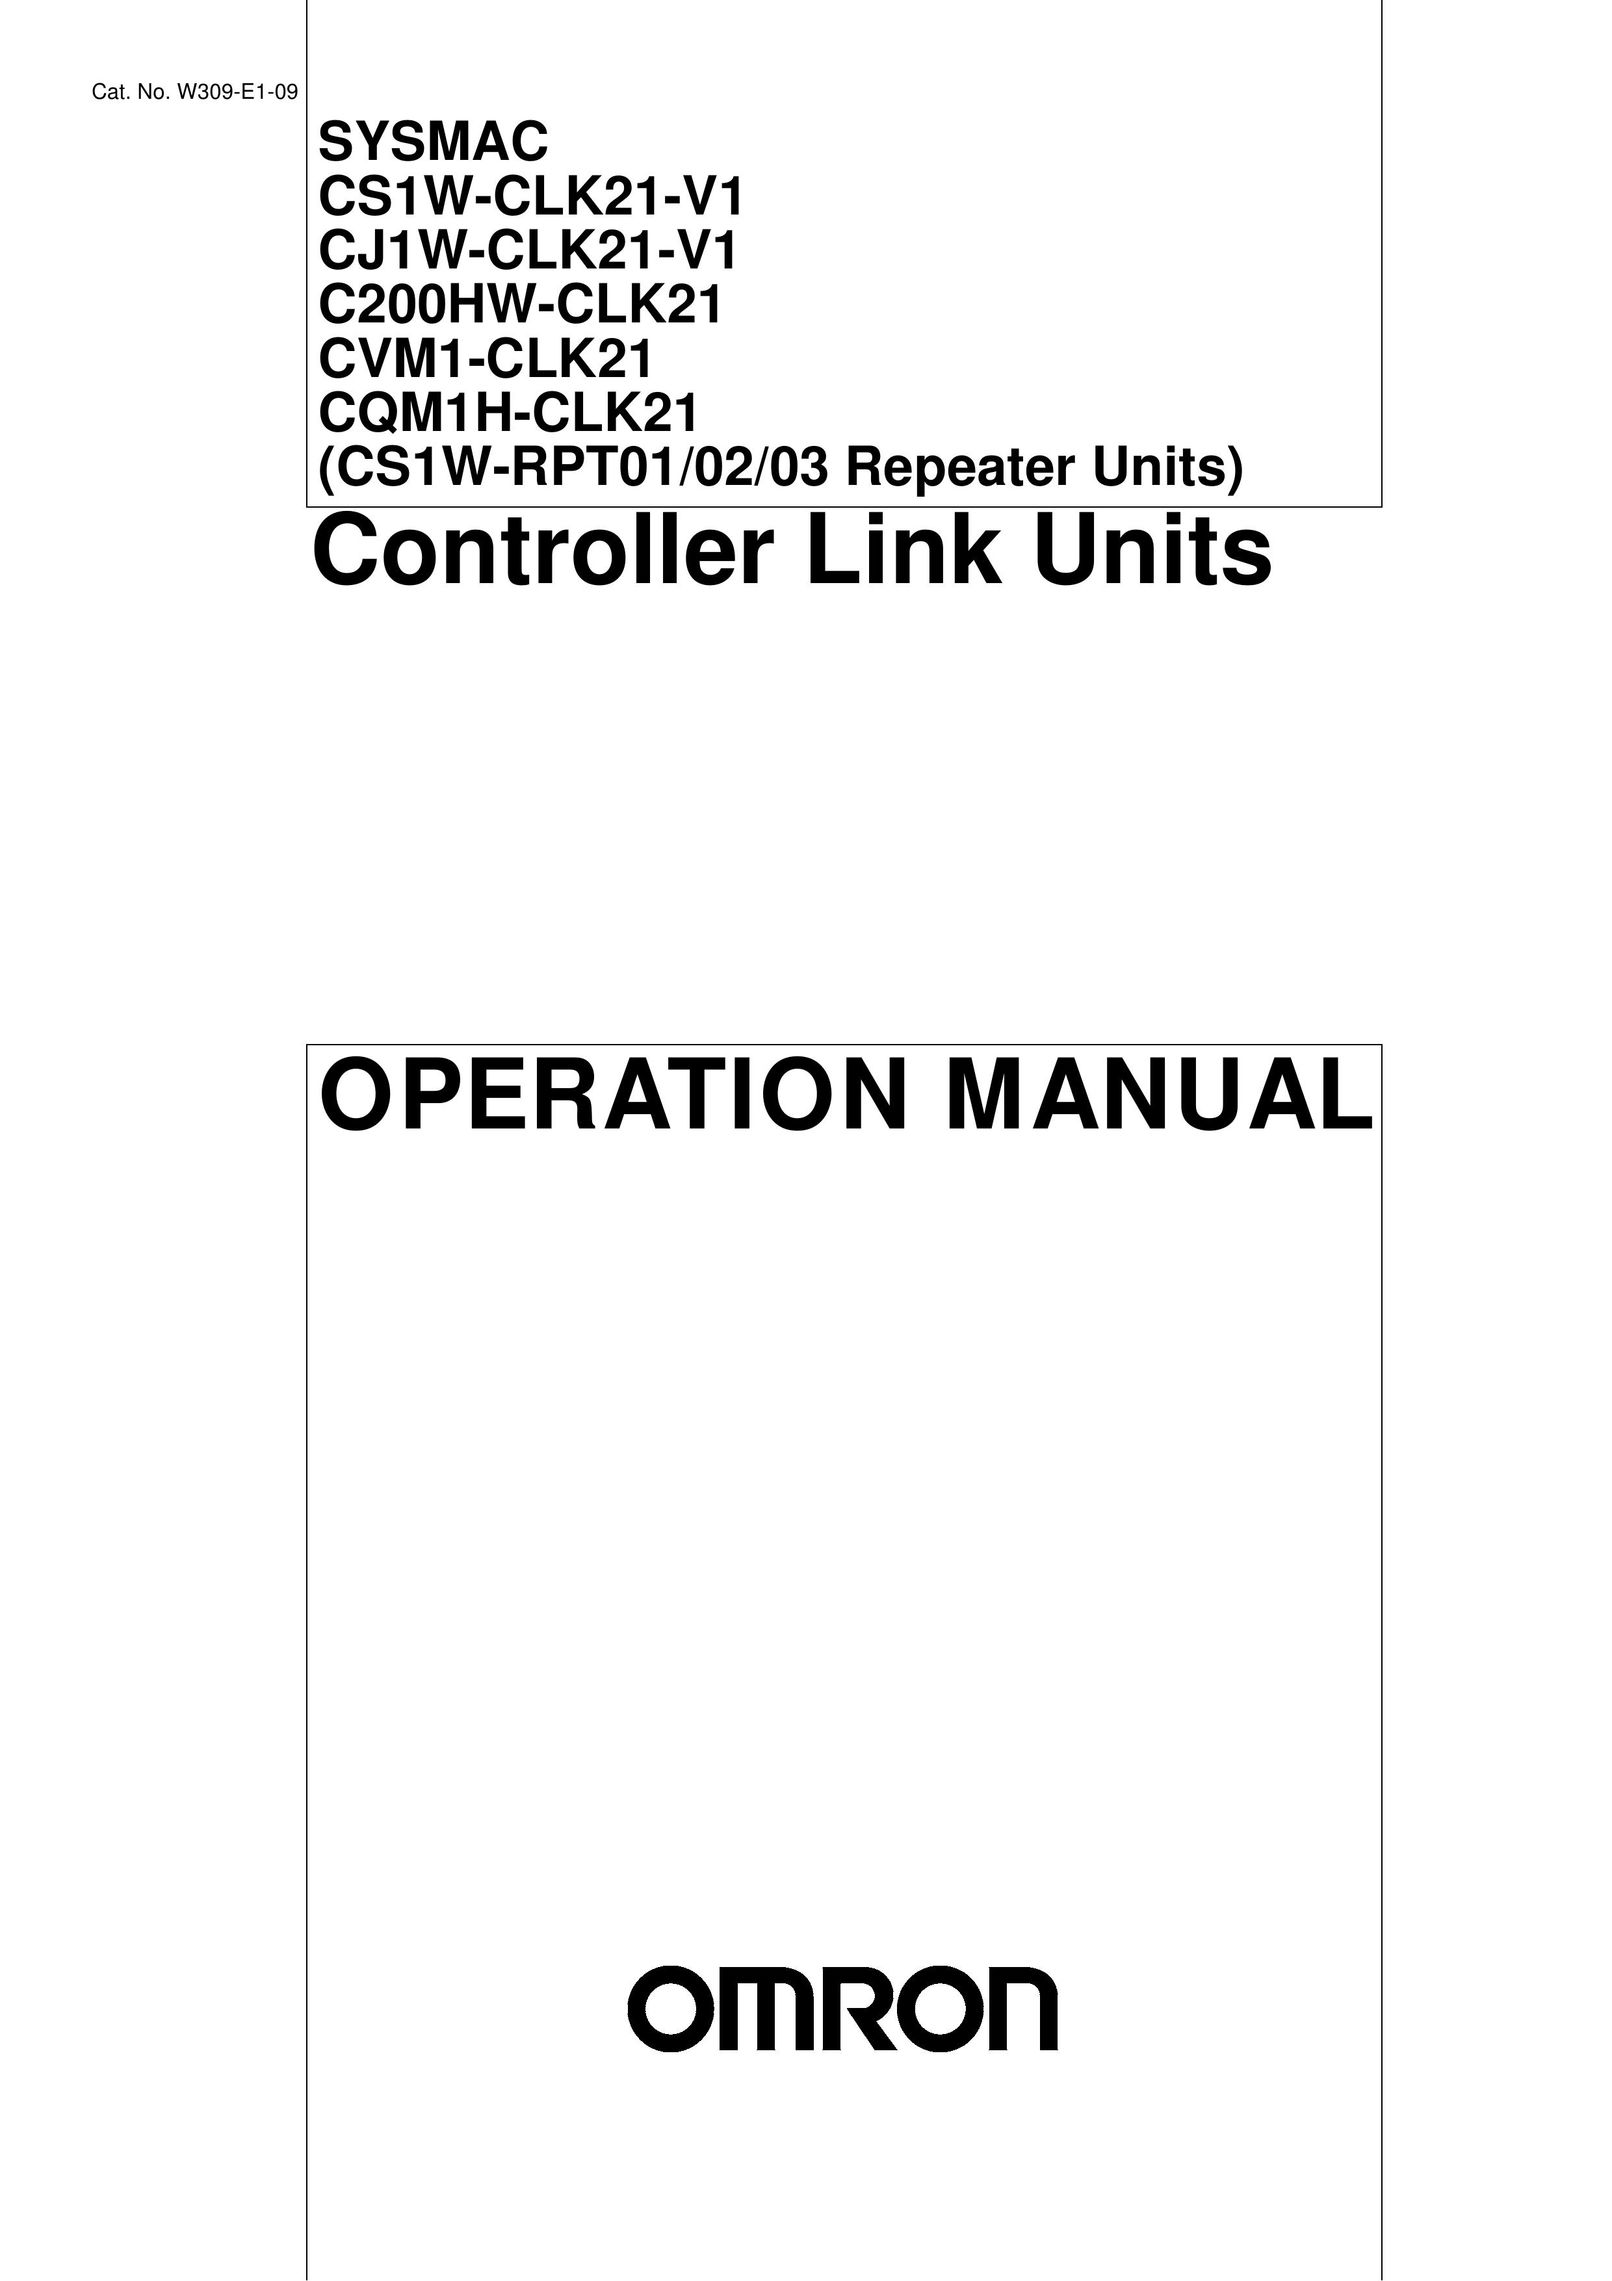 Omron CVM1-CLK21 Network Card User Manual